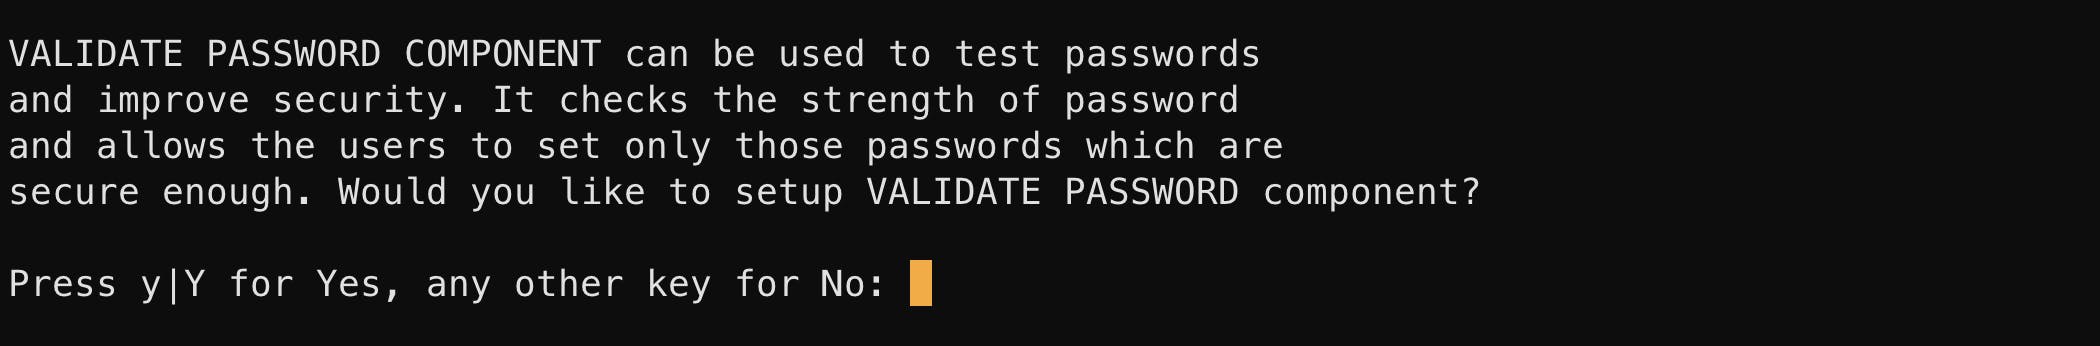 validate-password-module.png